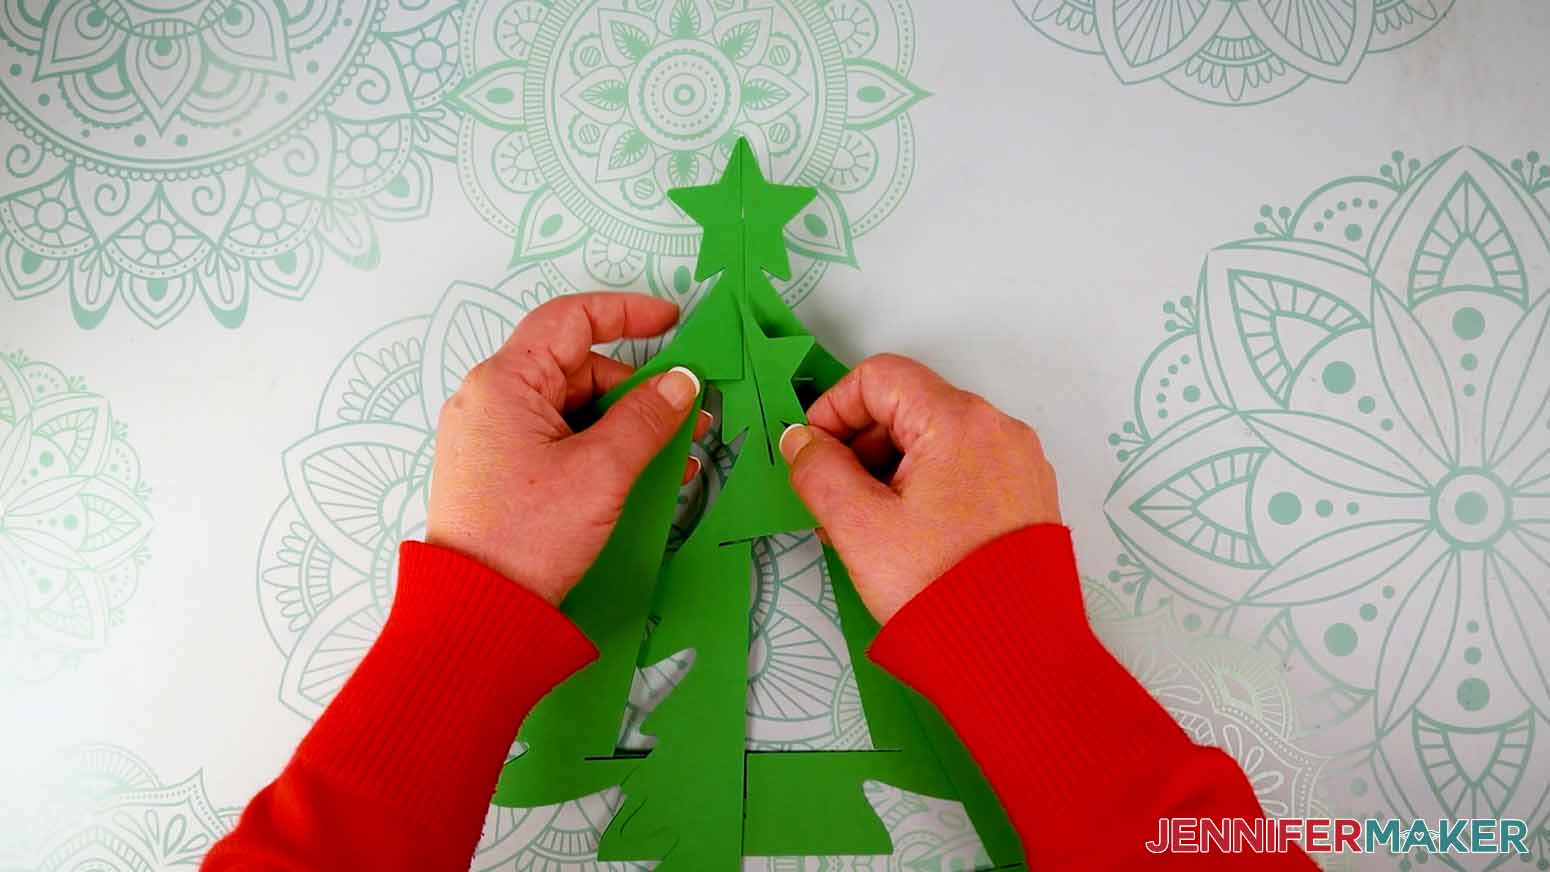 Lantern Pop-Up Cards for a 3D Christmas Greeting! - Jennifer Maker